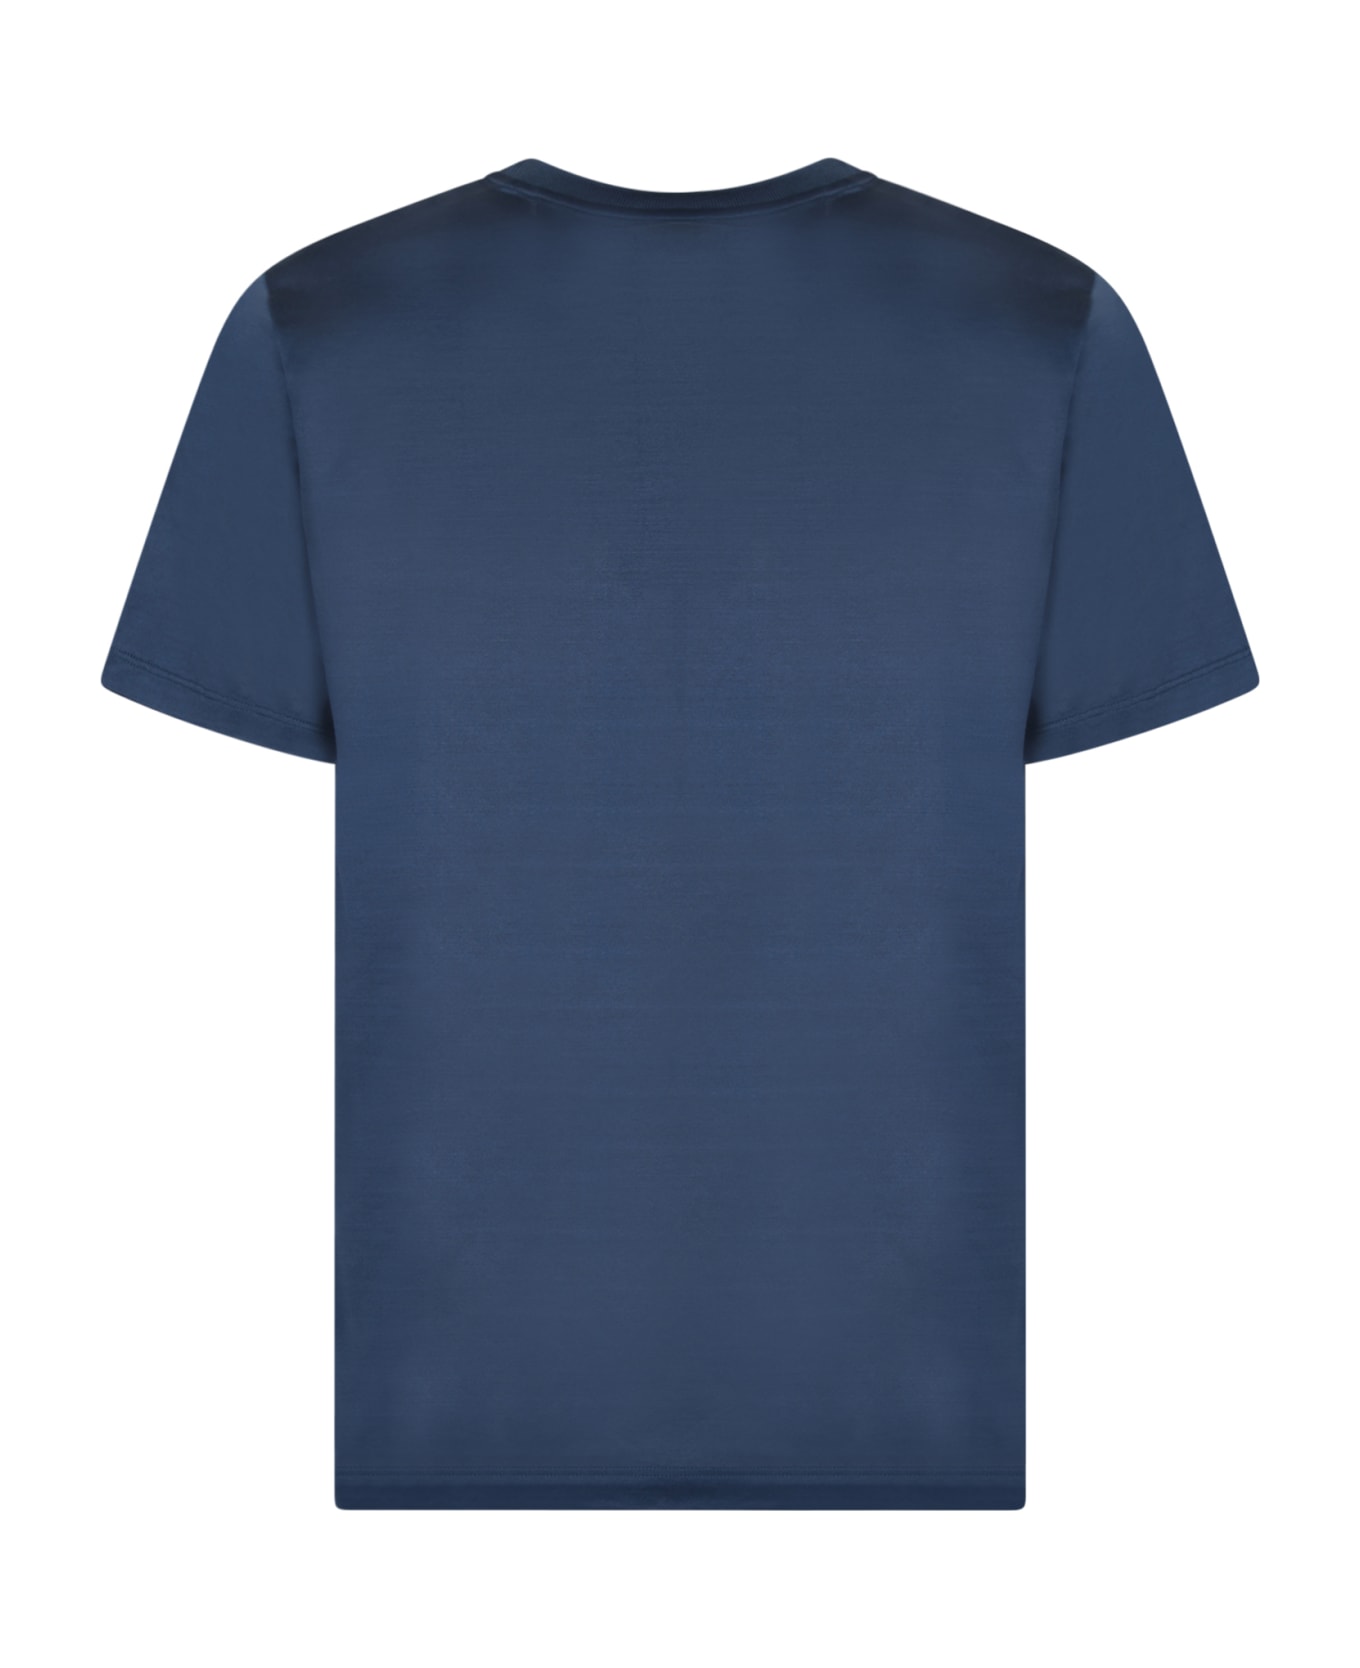 Paul Smith Striped Pocket T-shirt - Blue